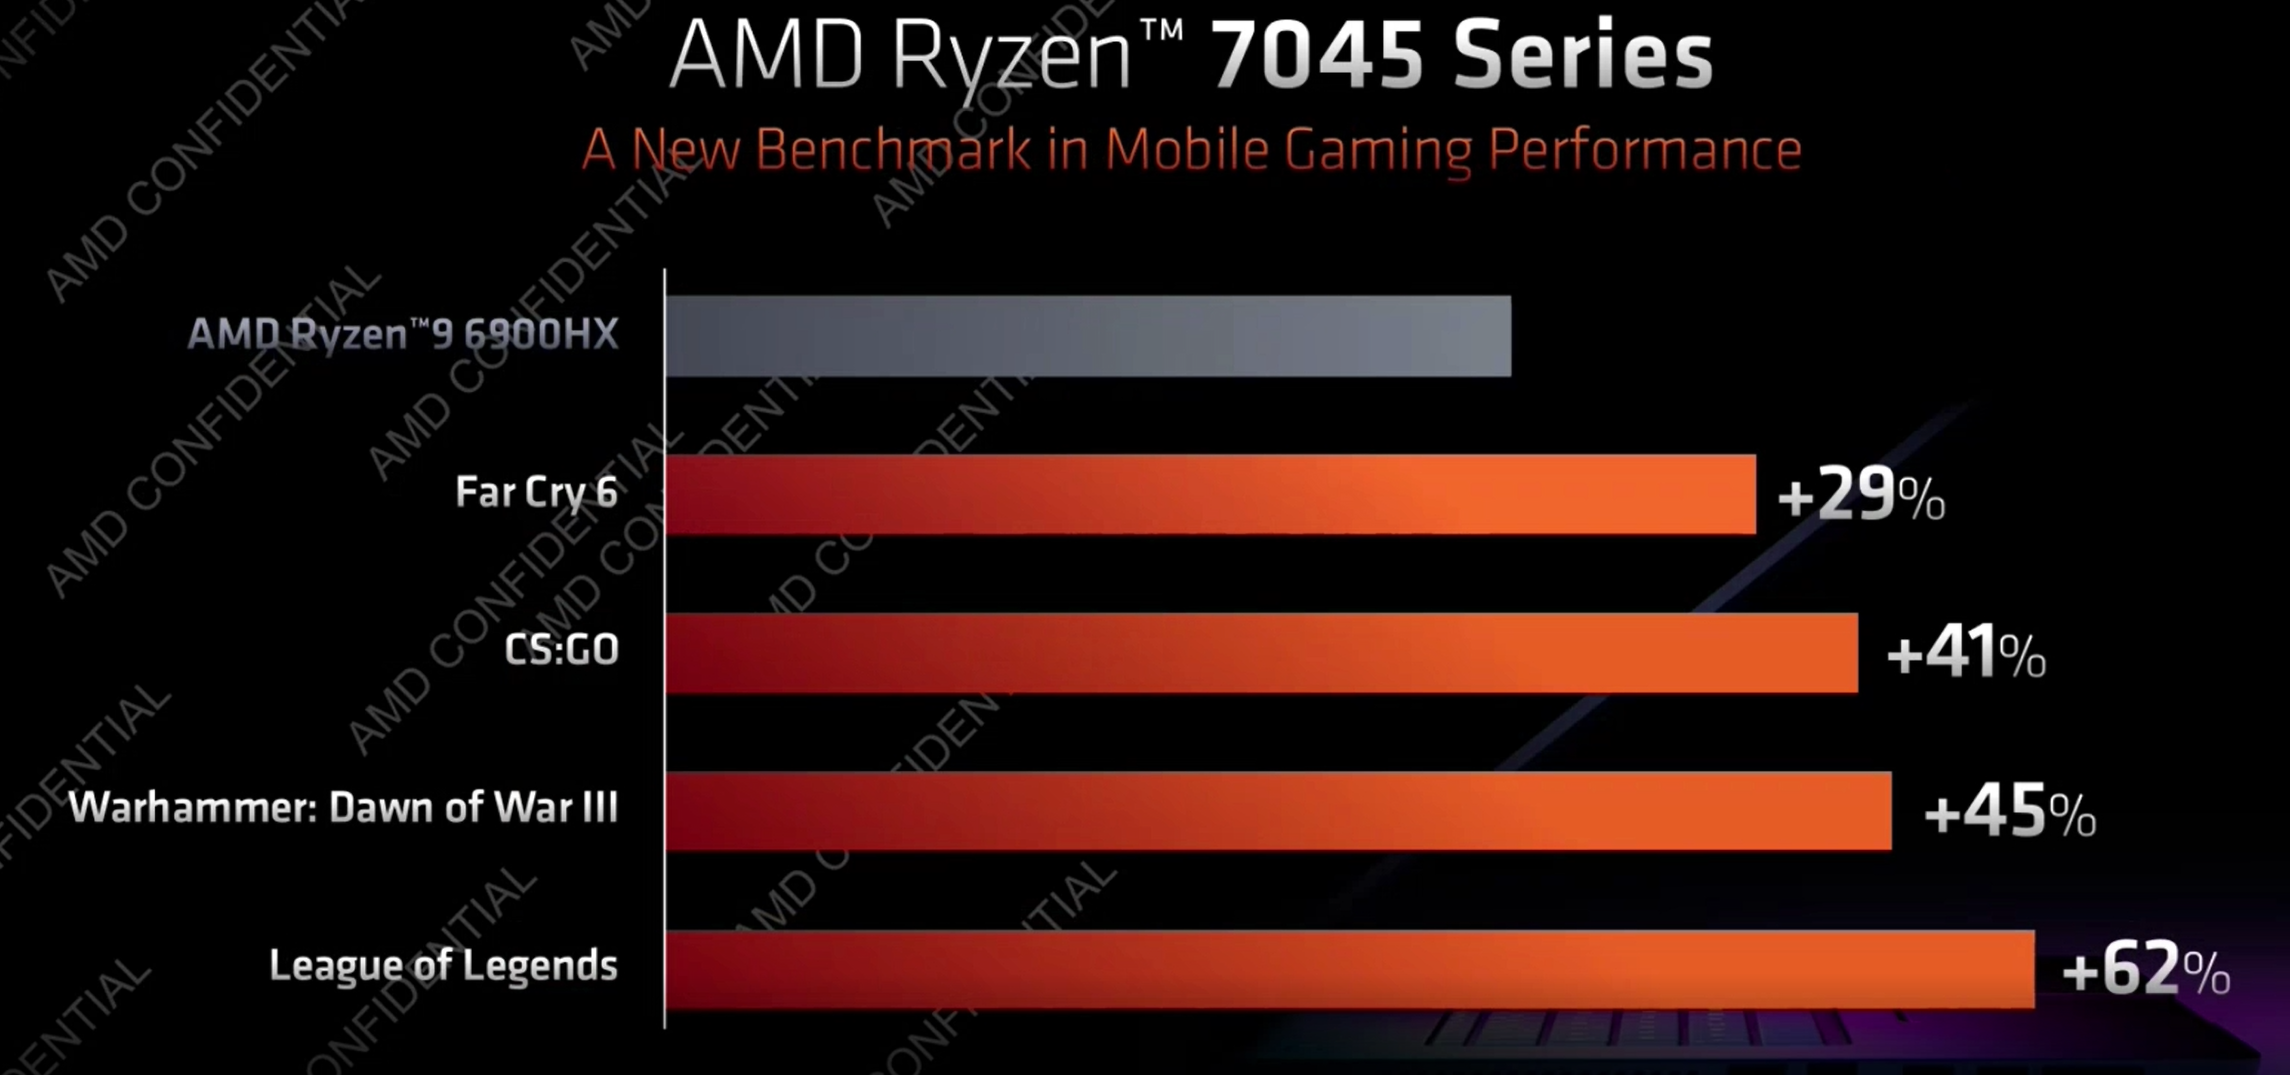 AMD Ryzen 7045 Mobile Series Gaming